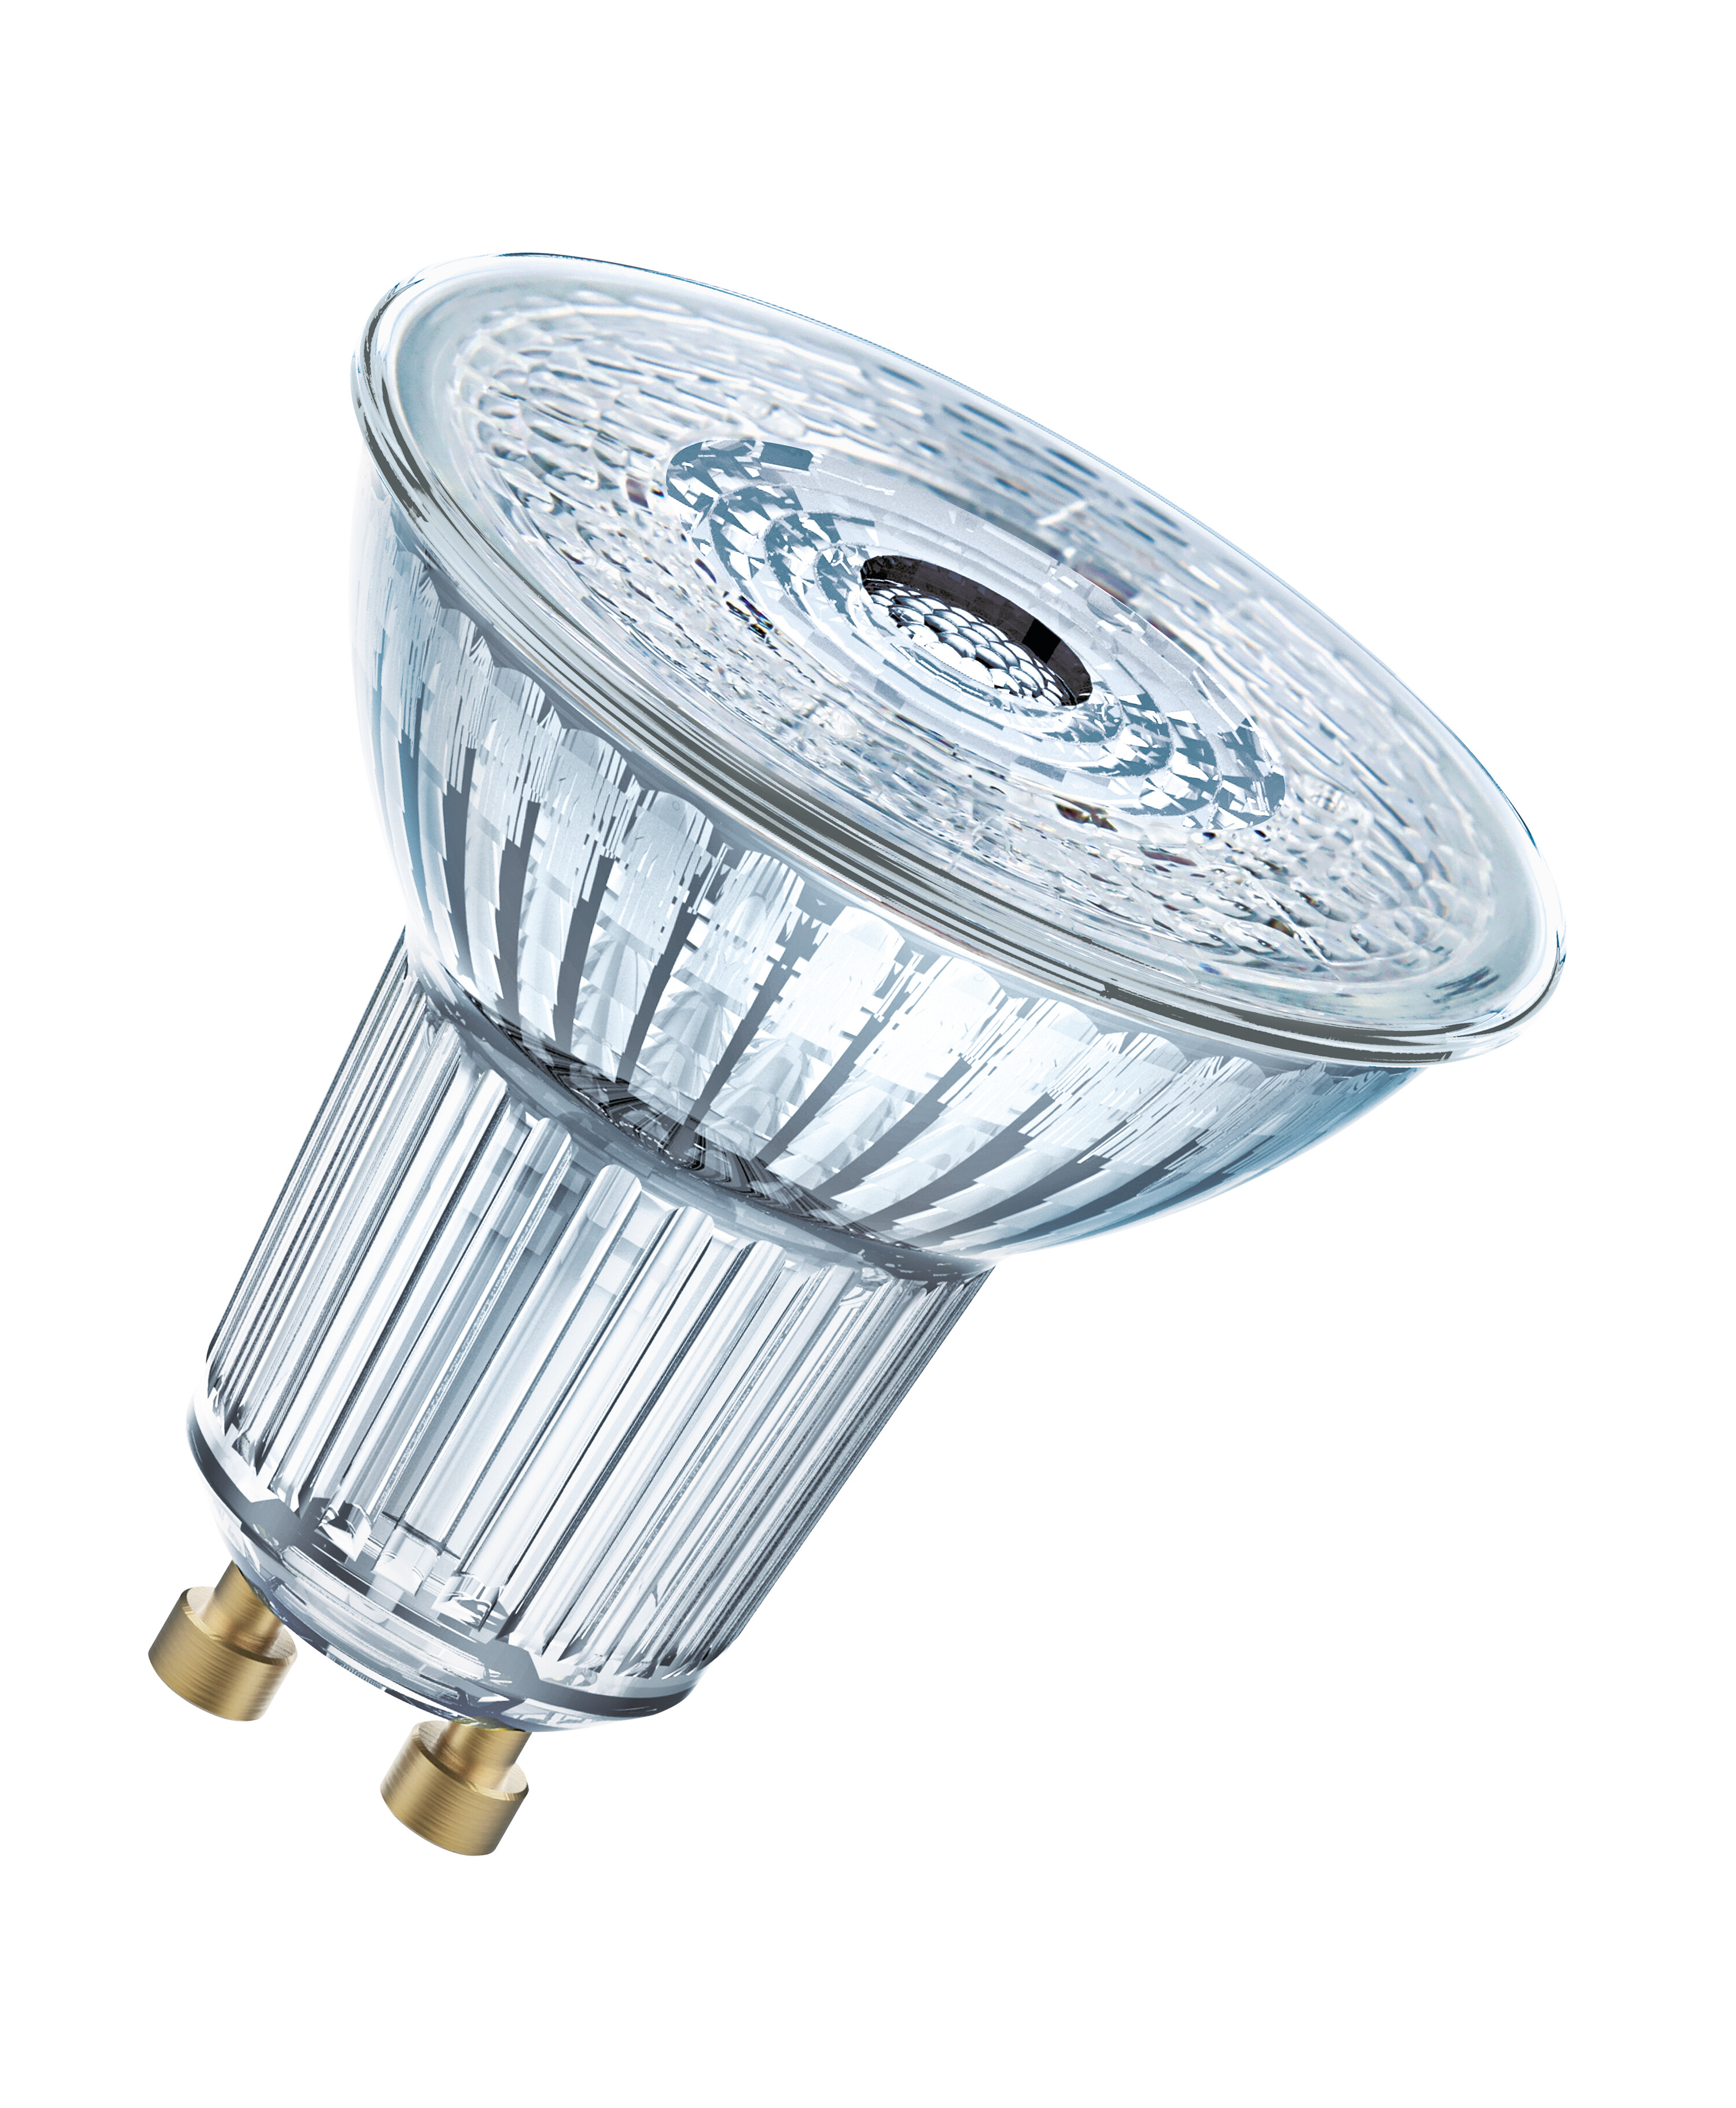 LED-Refektorlampe Lumen 230 LED PAR16 OSRAM  BASE Warmweiß